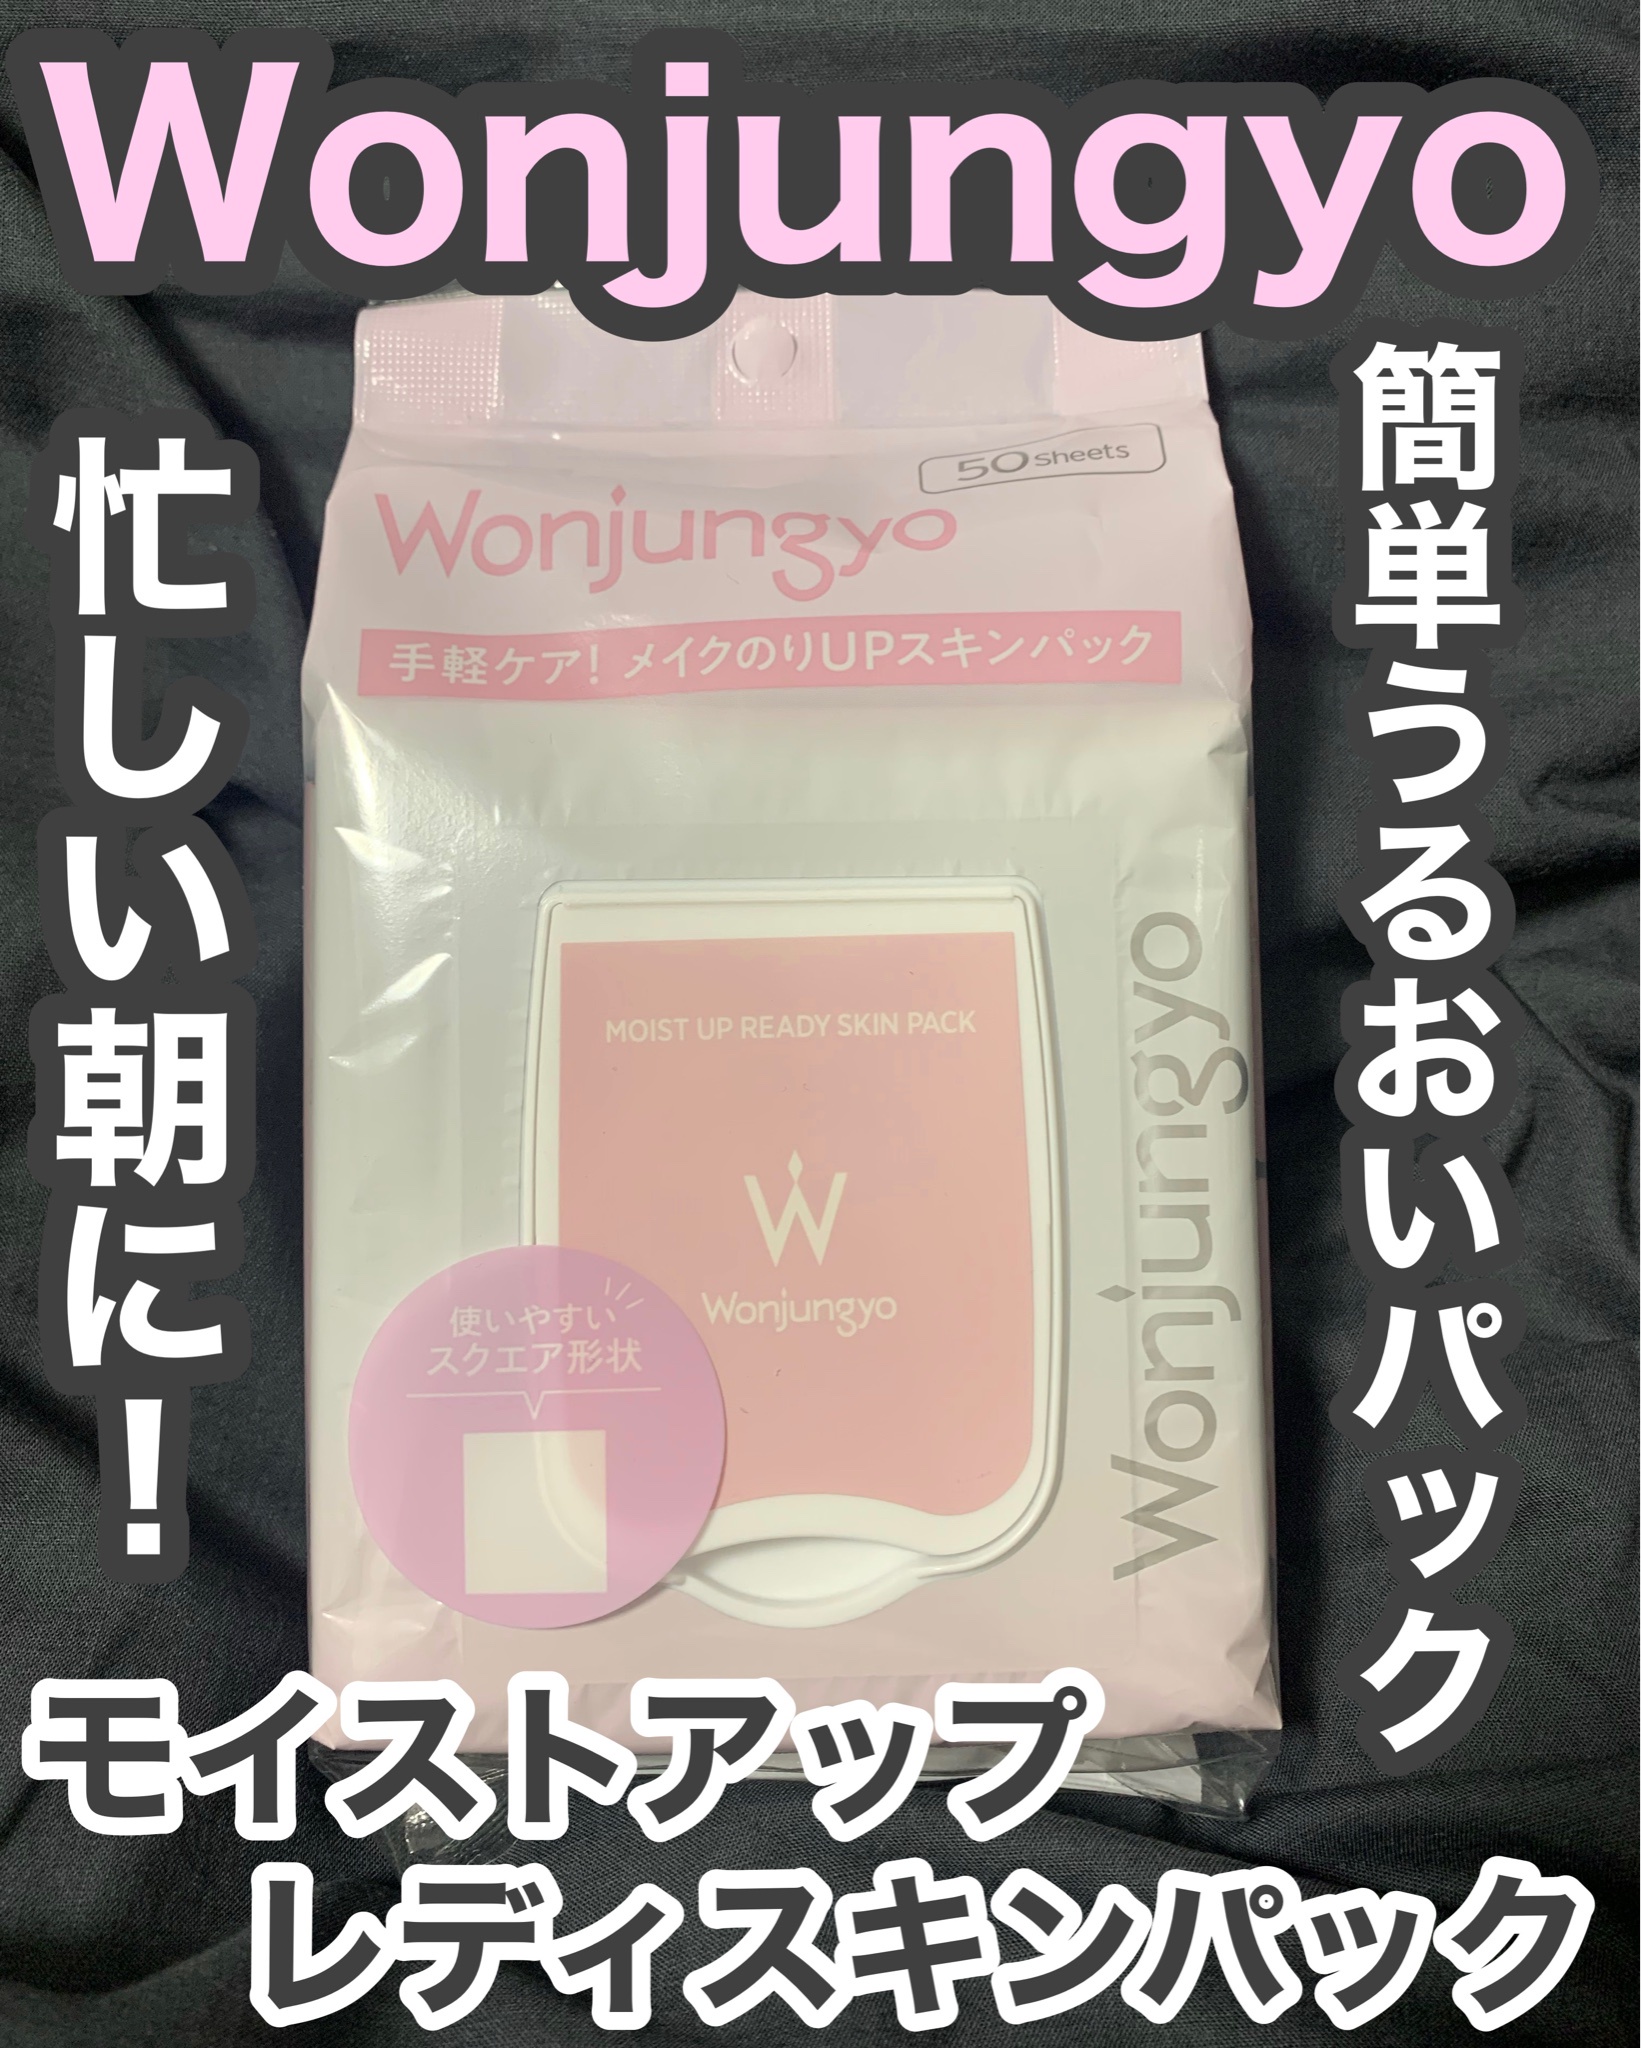 Wonjungyo / ウォンジョンヨ モイストアップレディスキンパックの公式